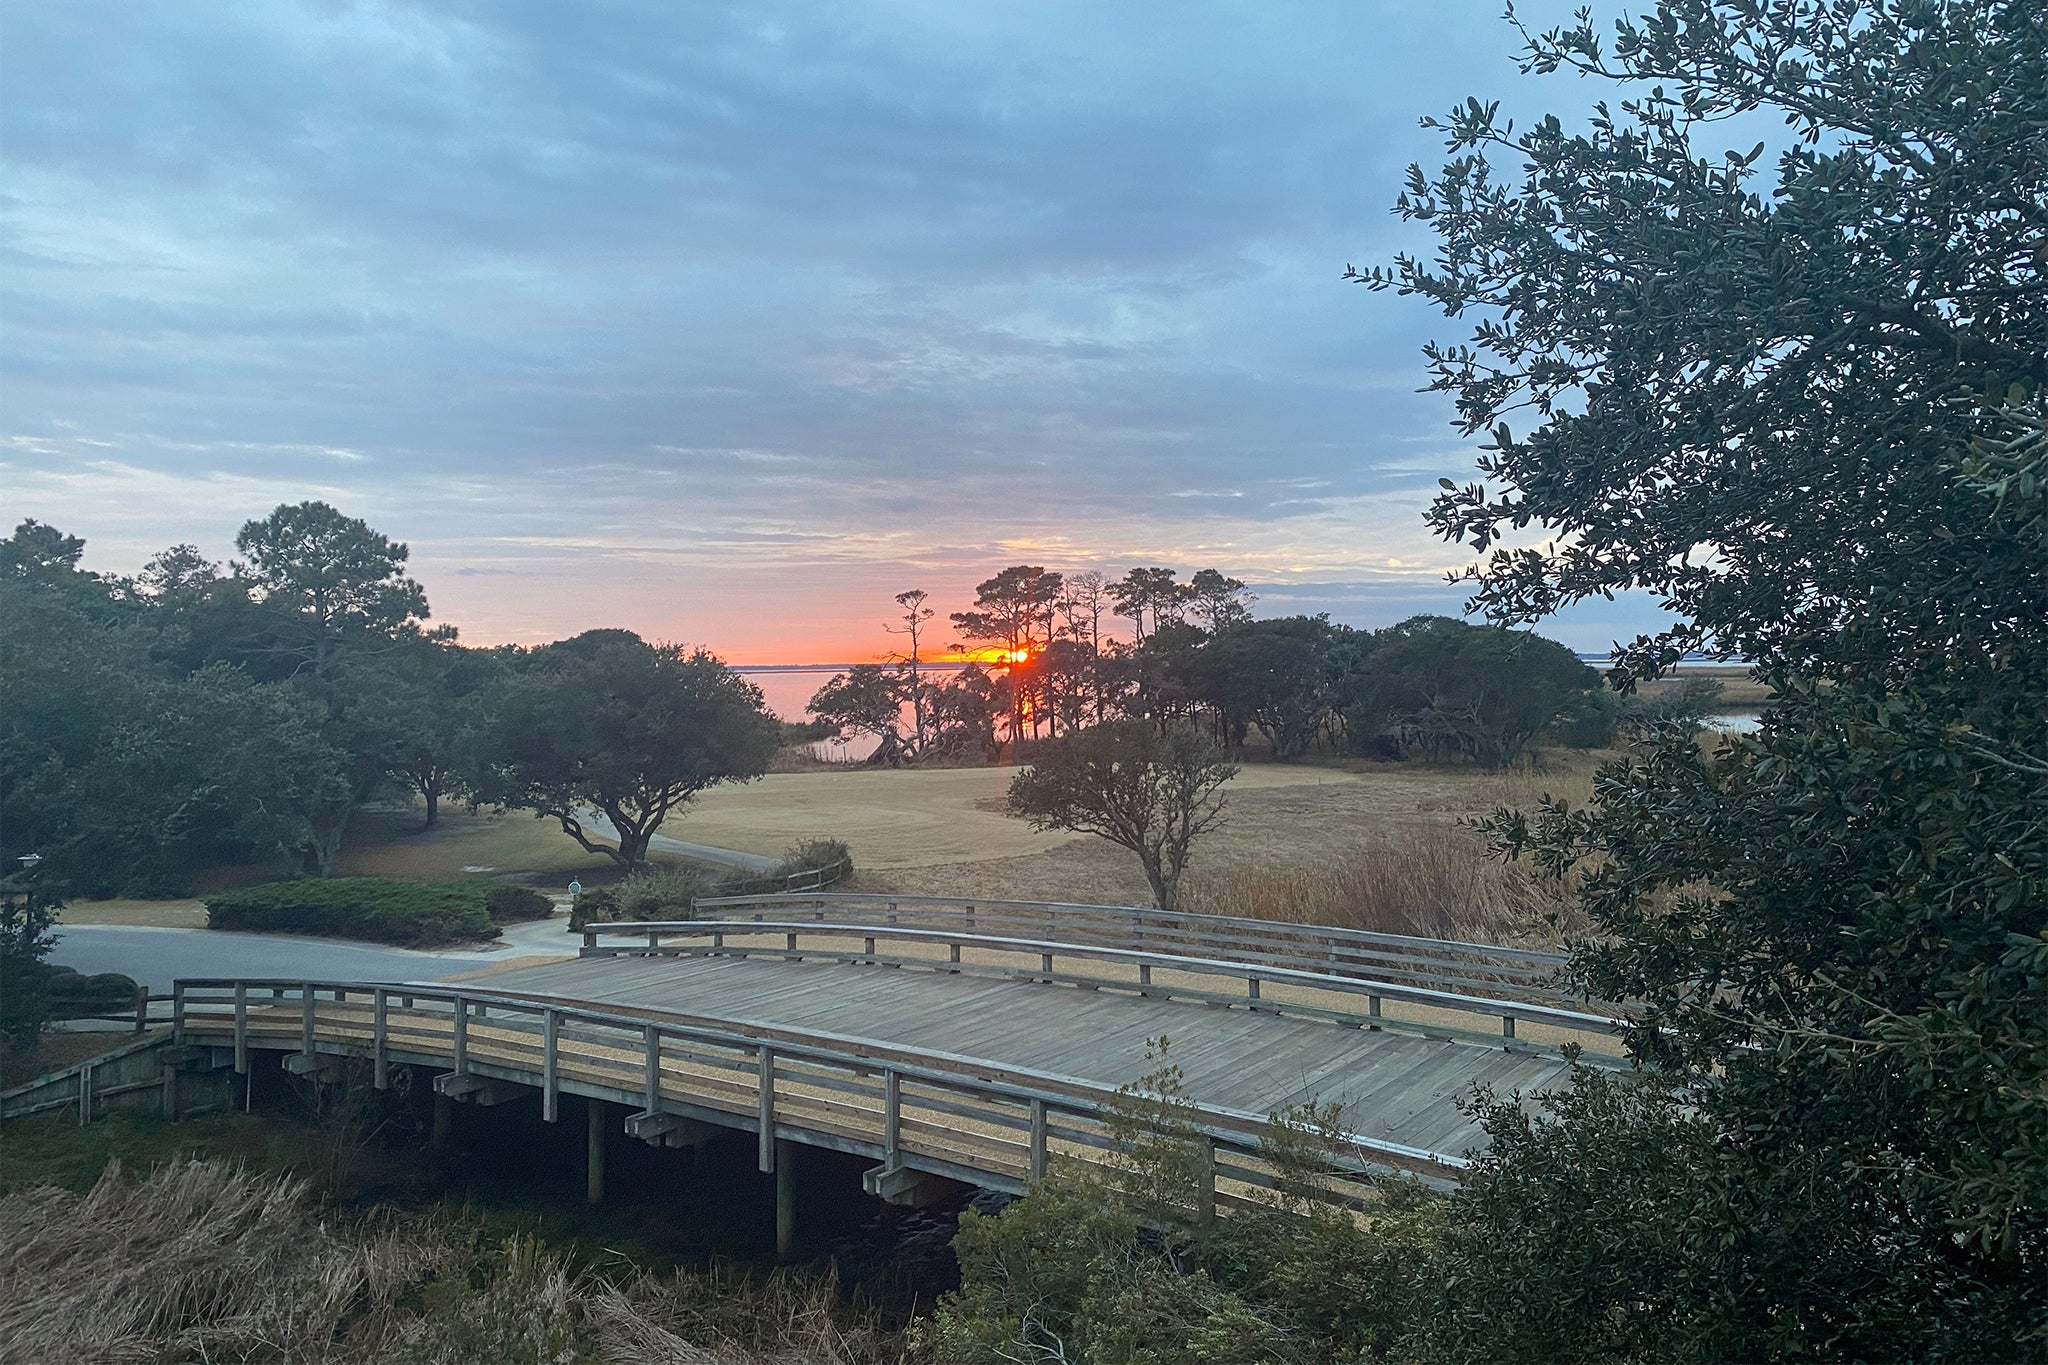 CC104: Afternoon Tee | Bridge View at Sunset